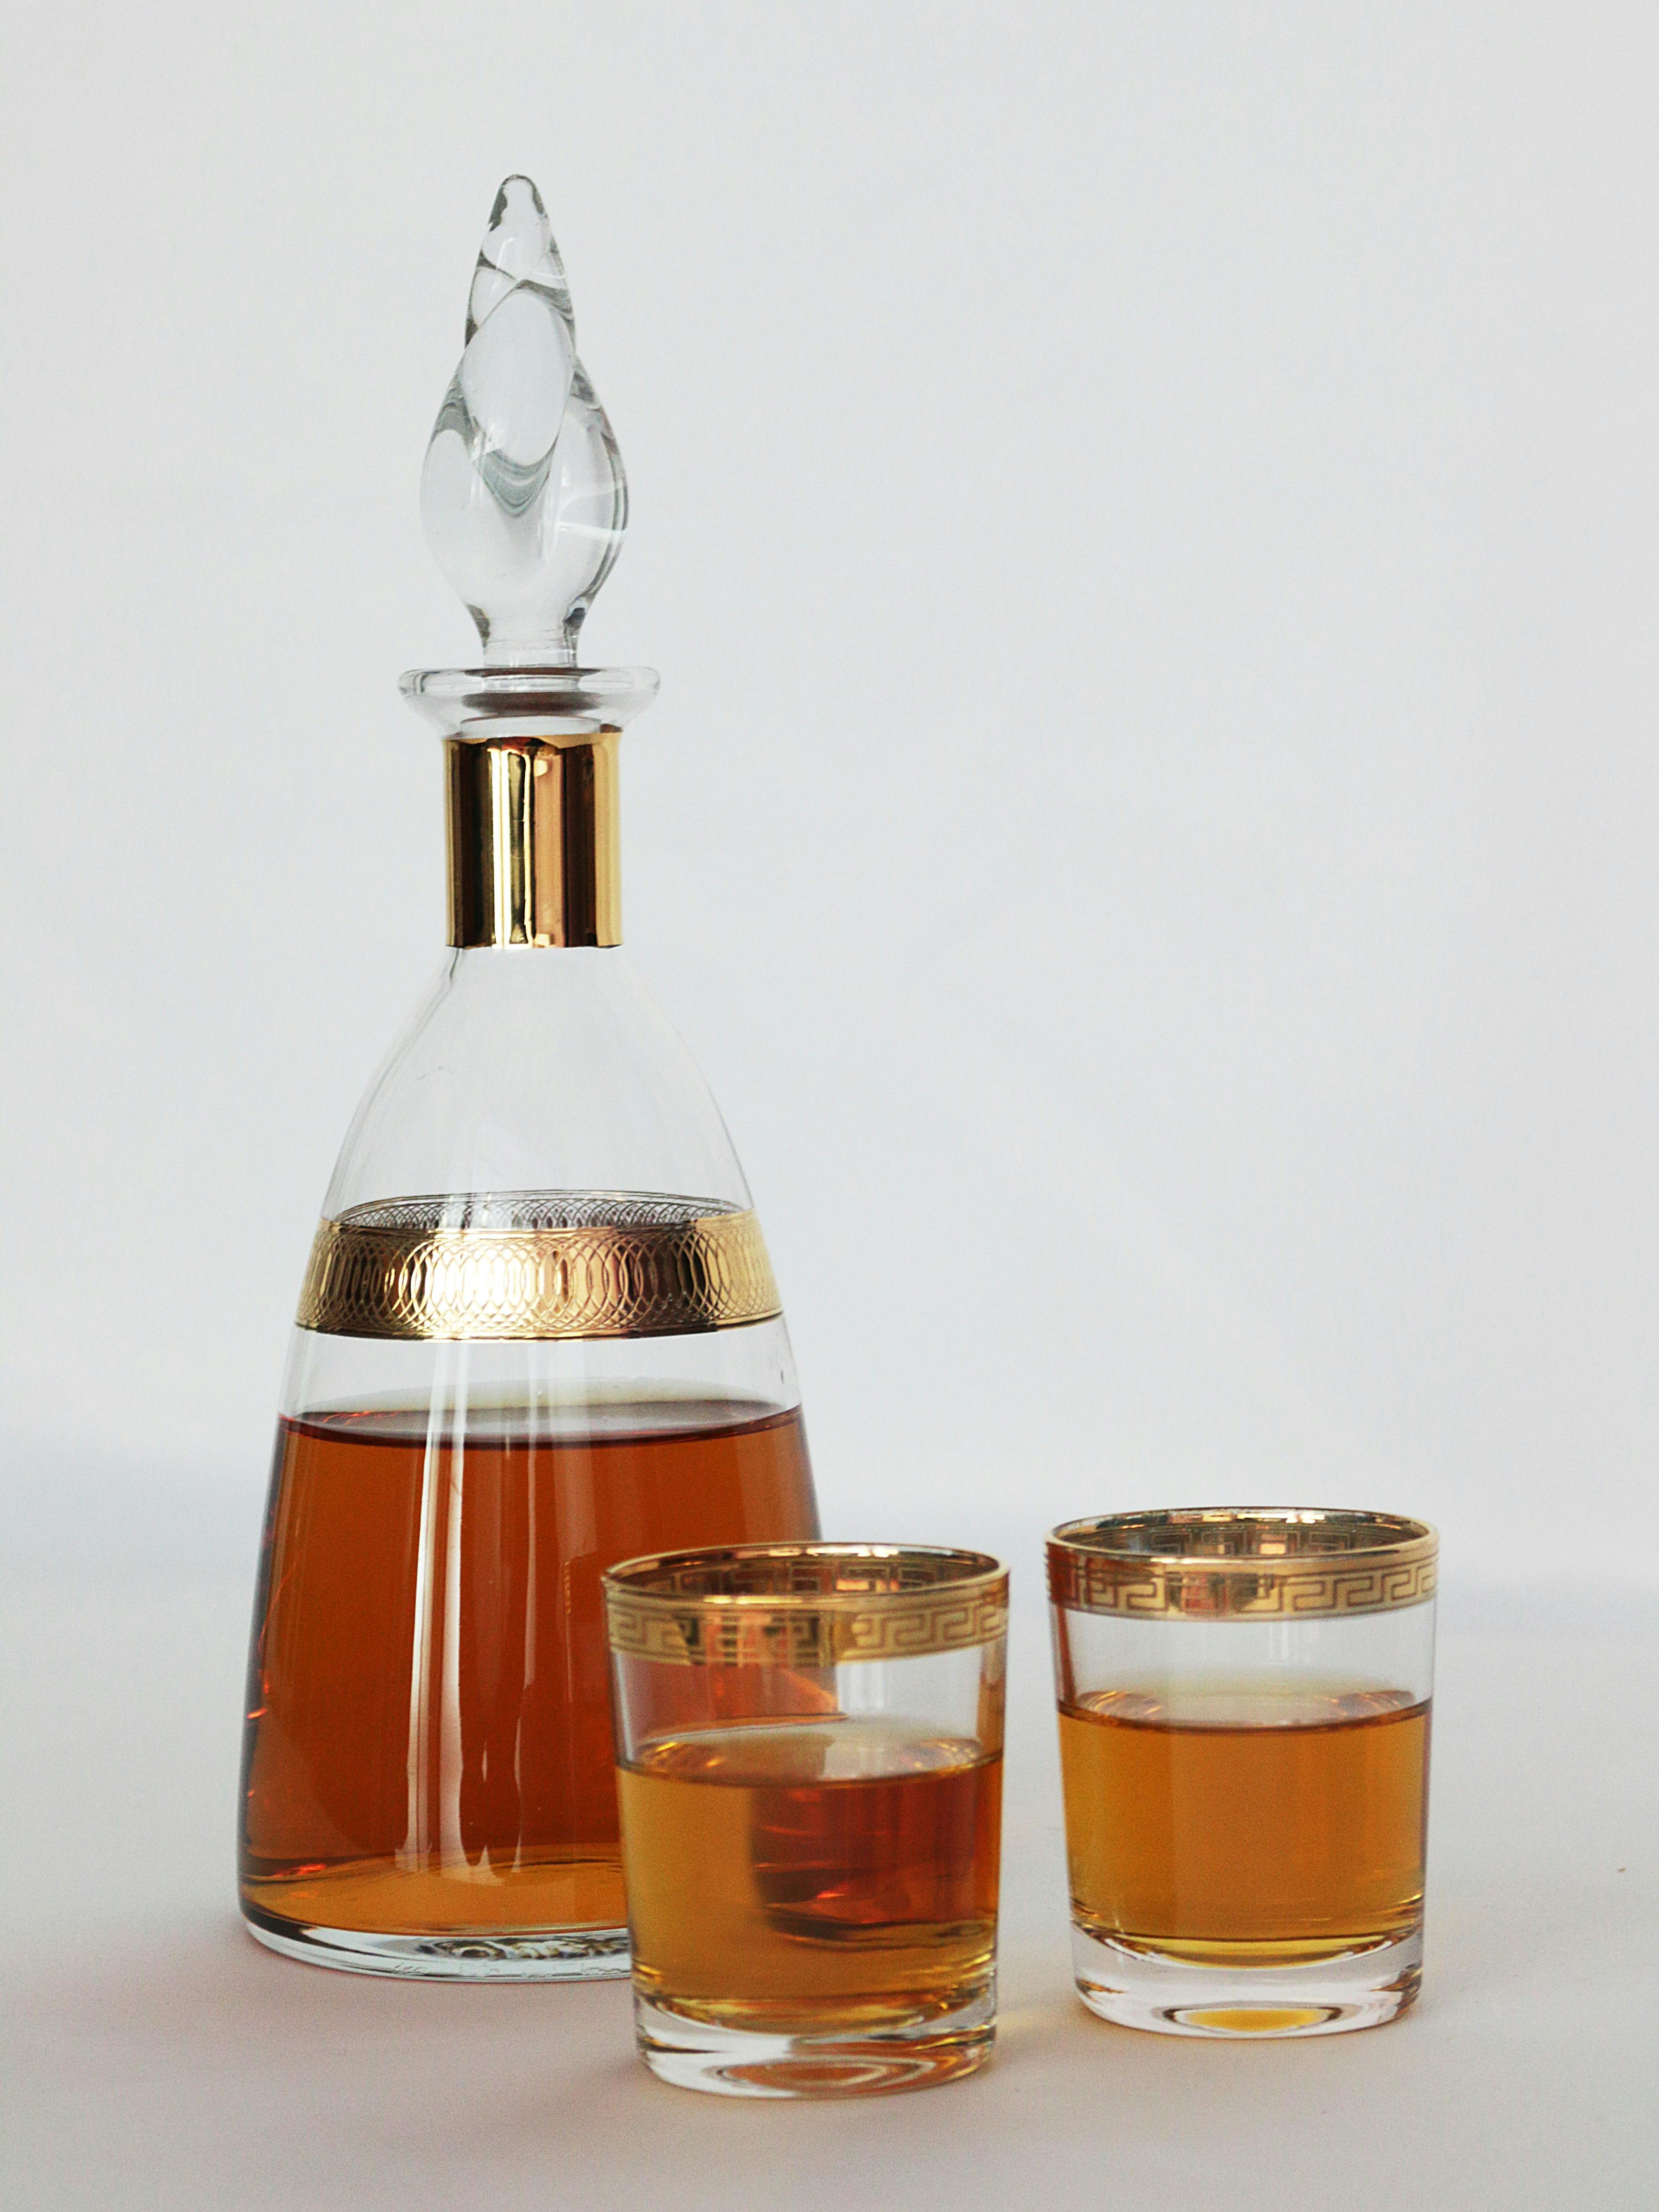 Chivas Regal Premium Scotch Whisky · Free Stock Photo